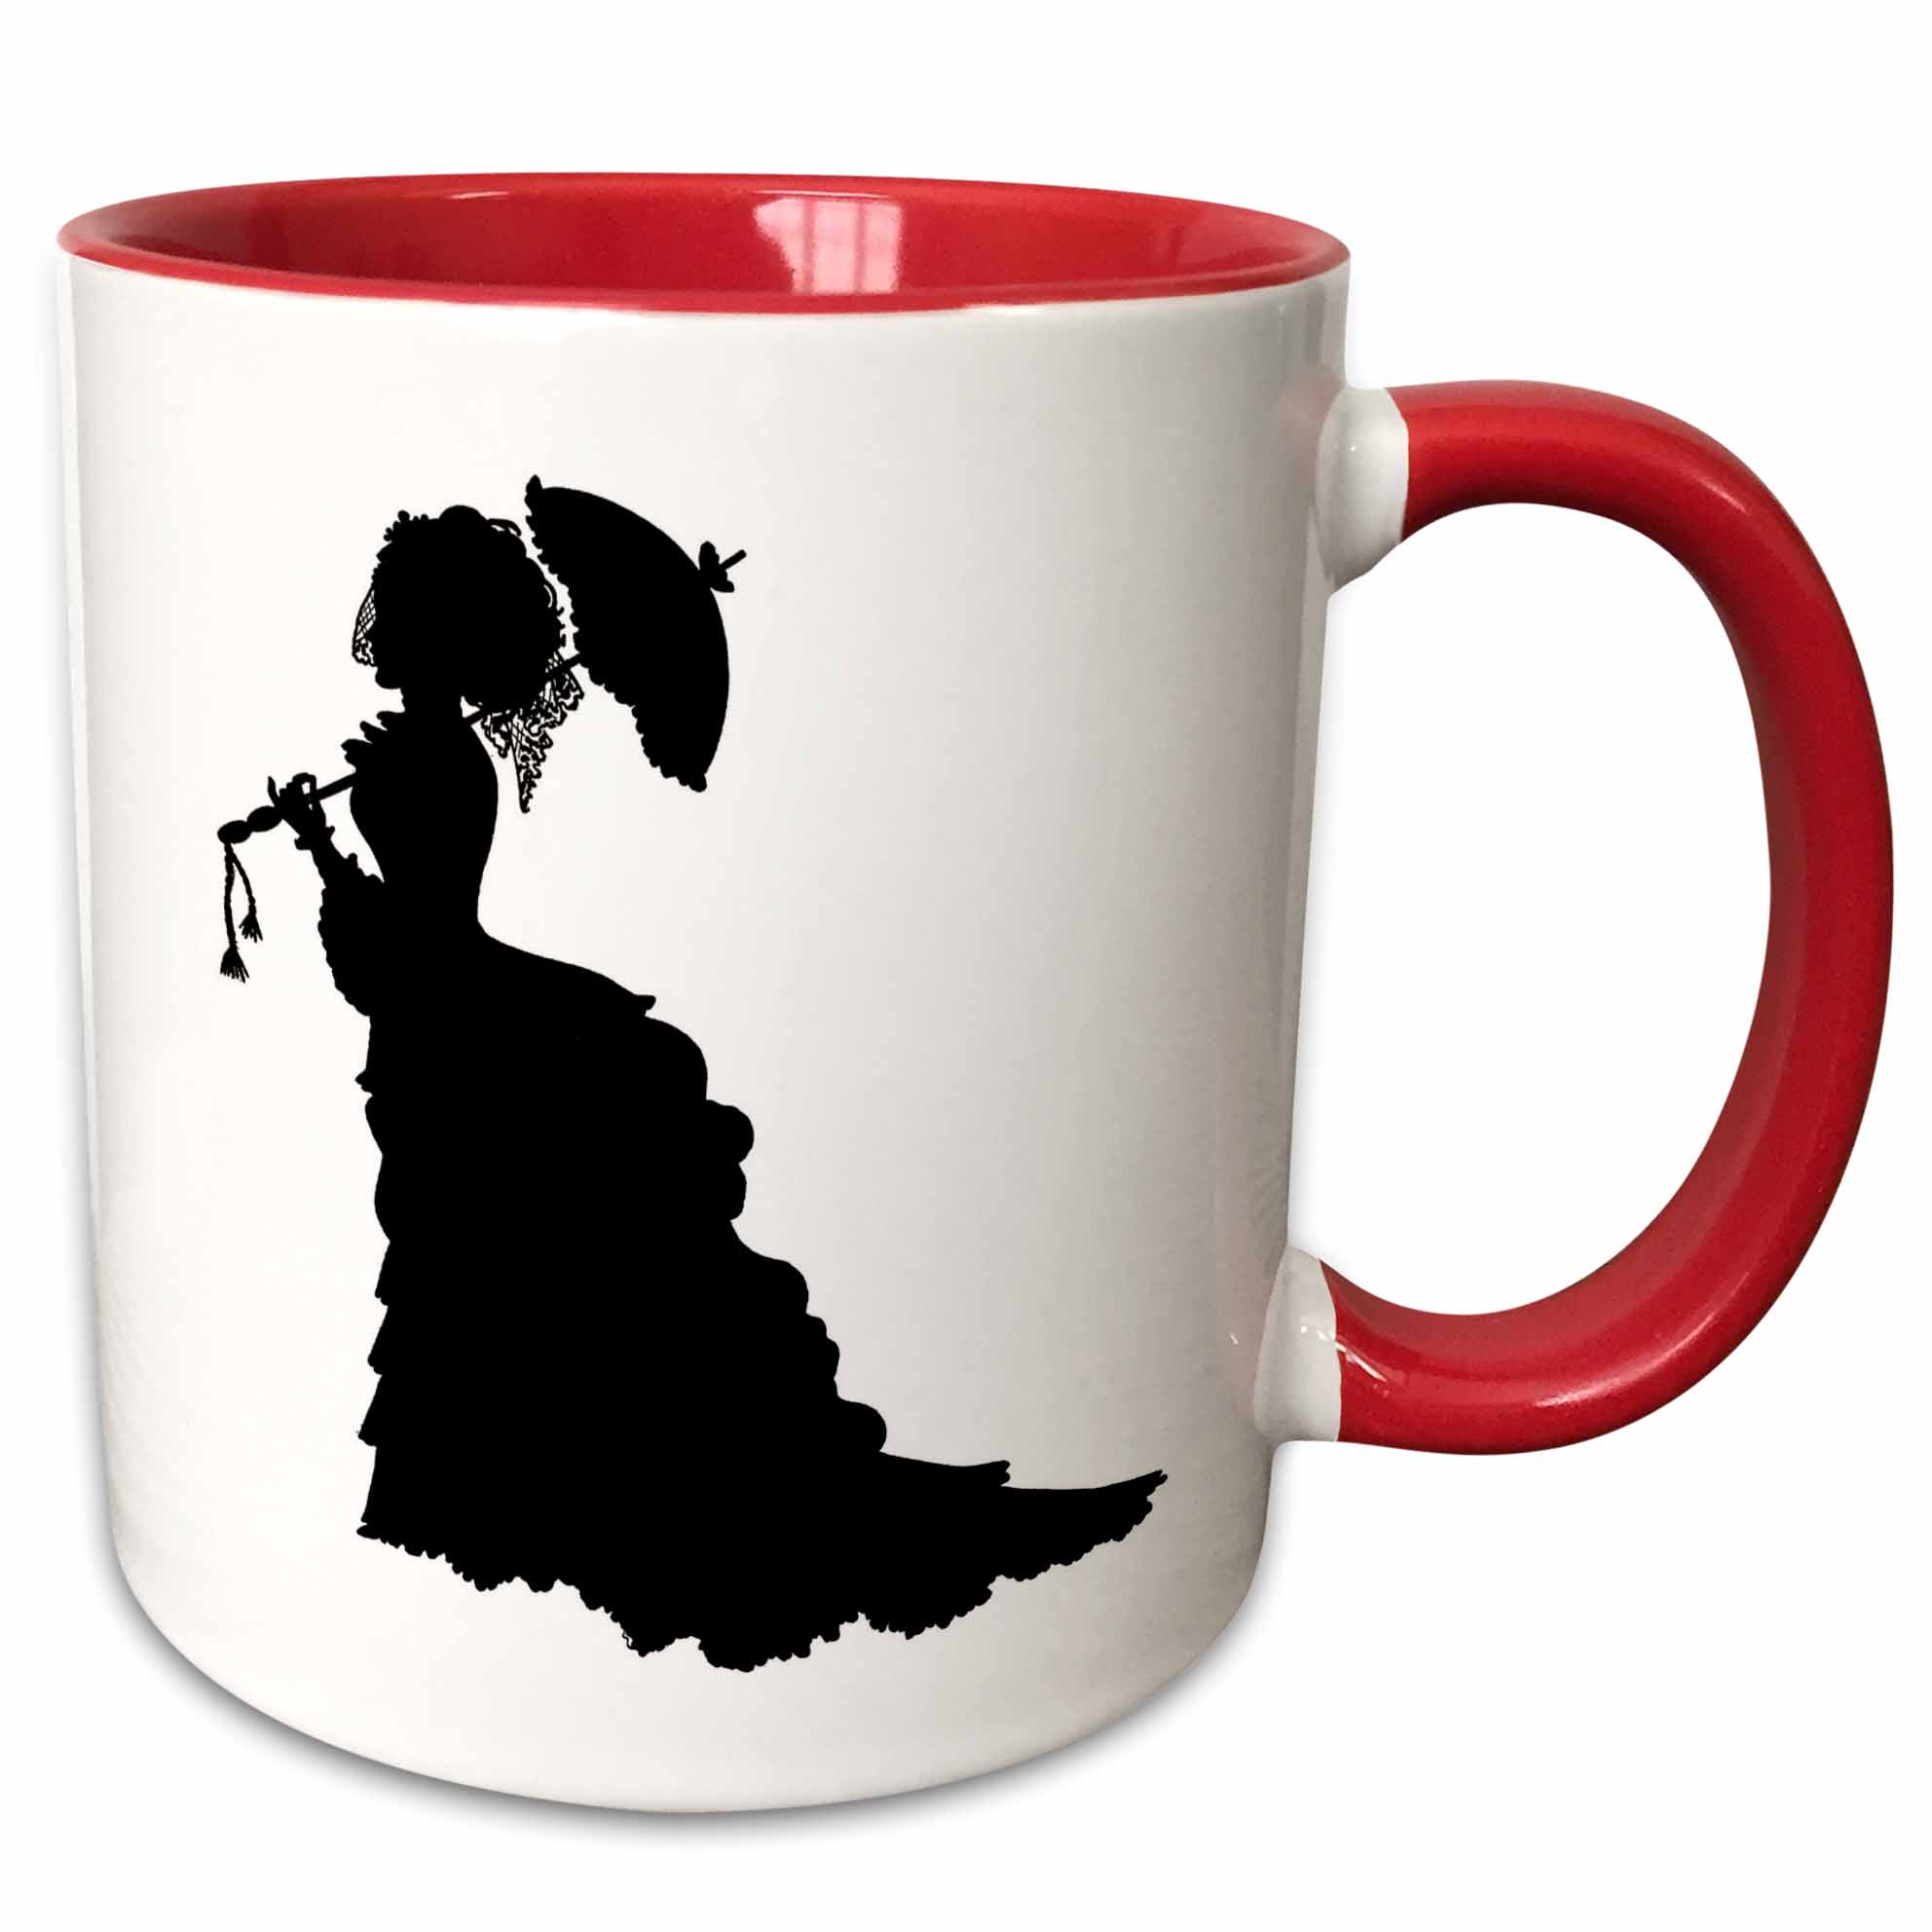 Victorian Lady In Black Silhouette Dress and Umbrella 11oz Two-Tone Red Mug mug-39110-5 - image 1 of 3